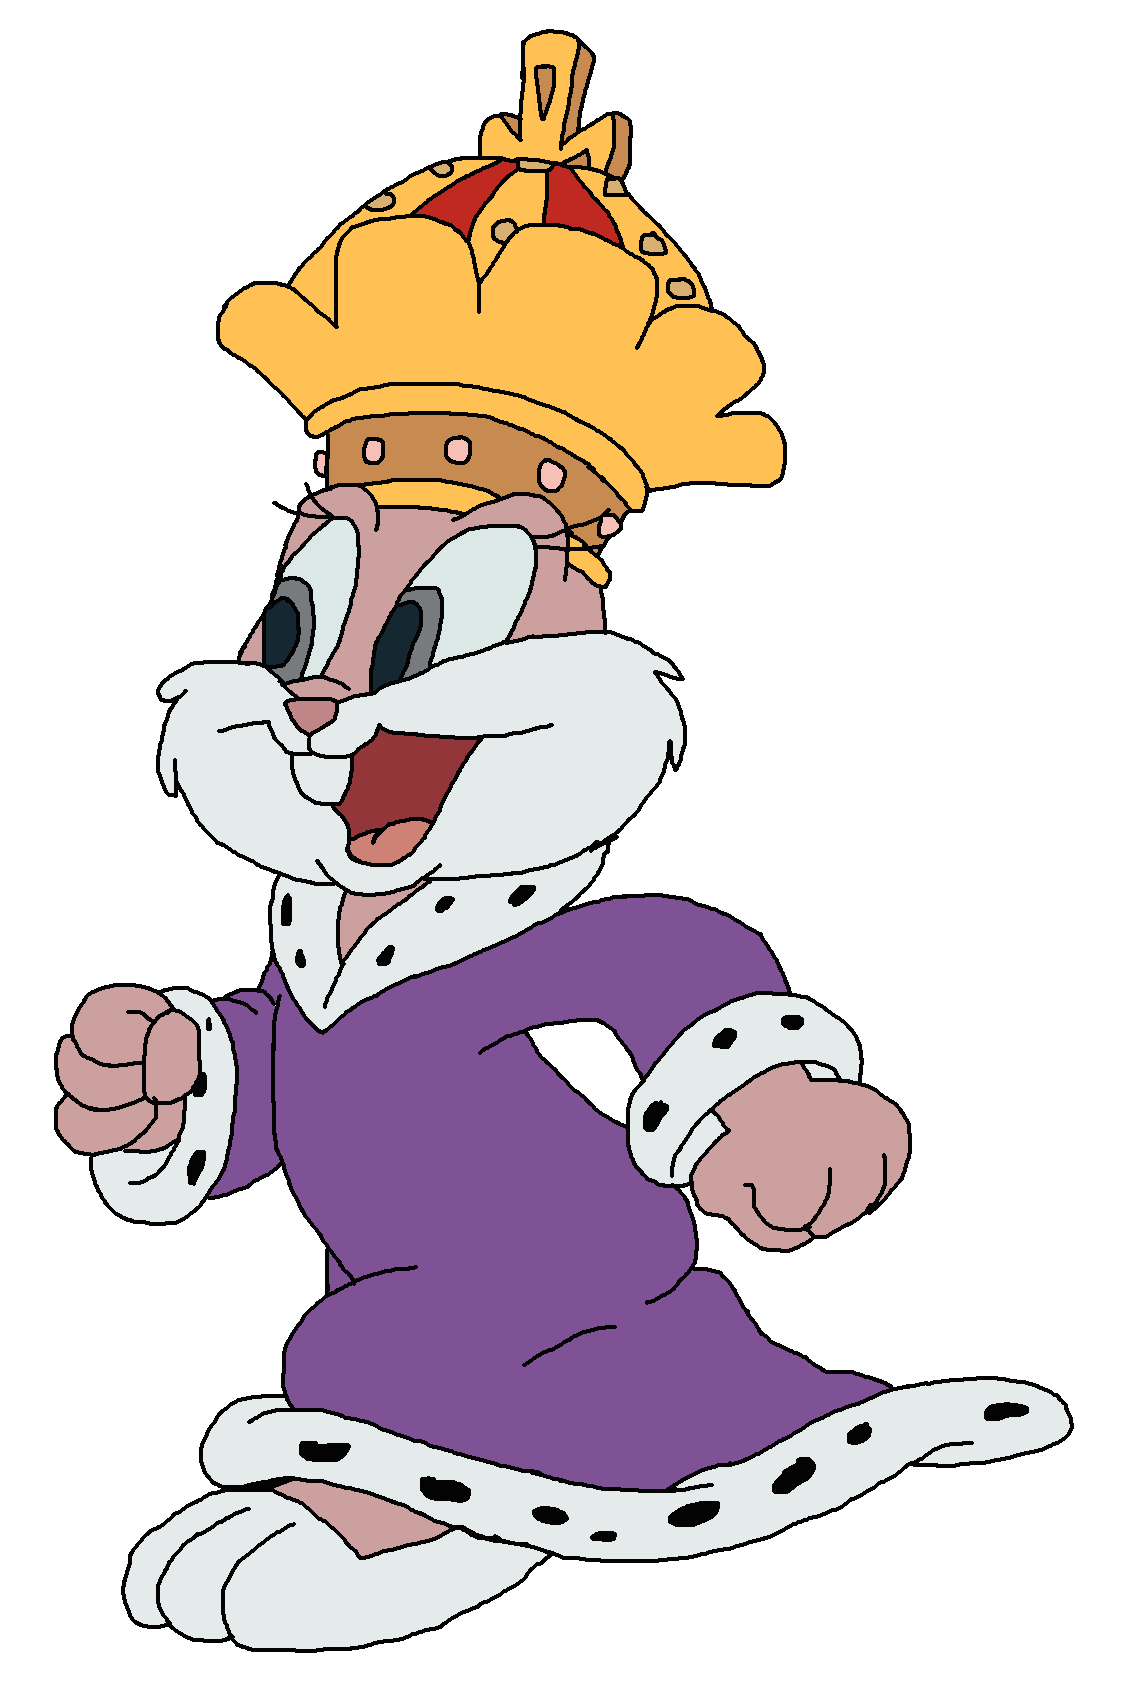 Princess Babs Bunny - Tiny Toon Adventures Fan Art (42841403) - Fanpop ...